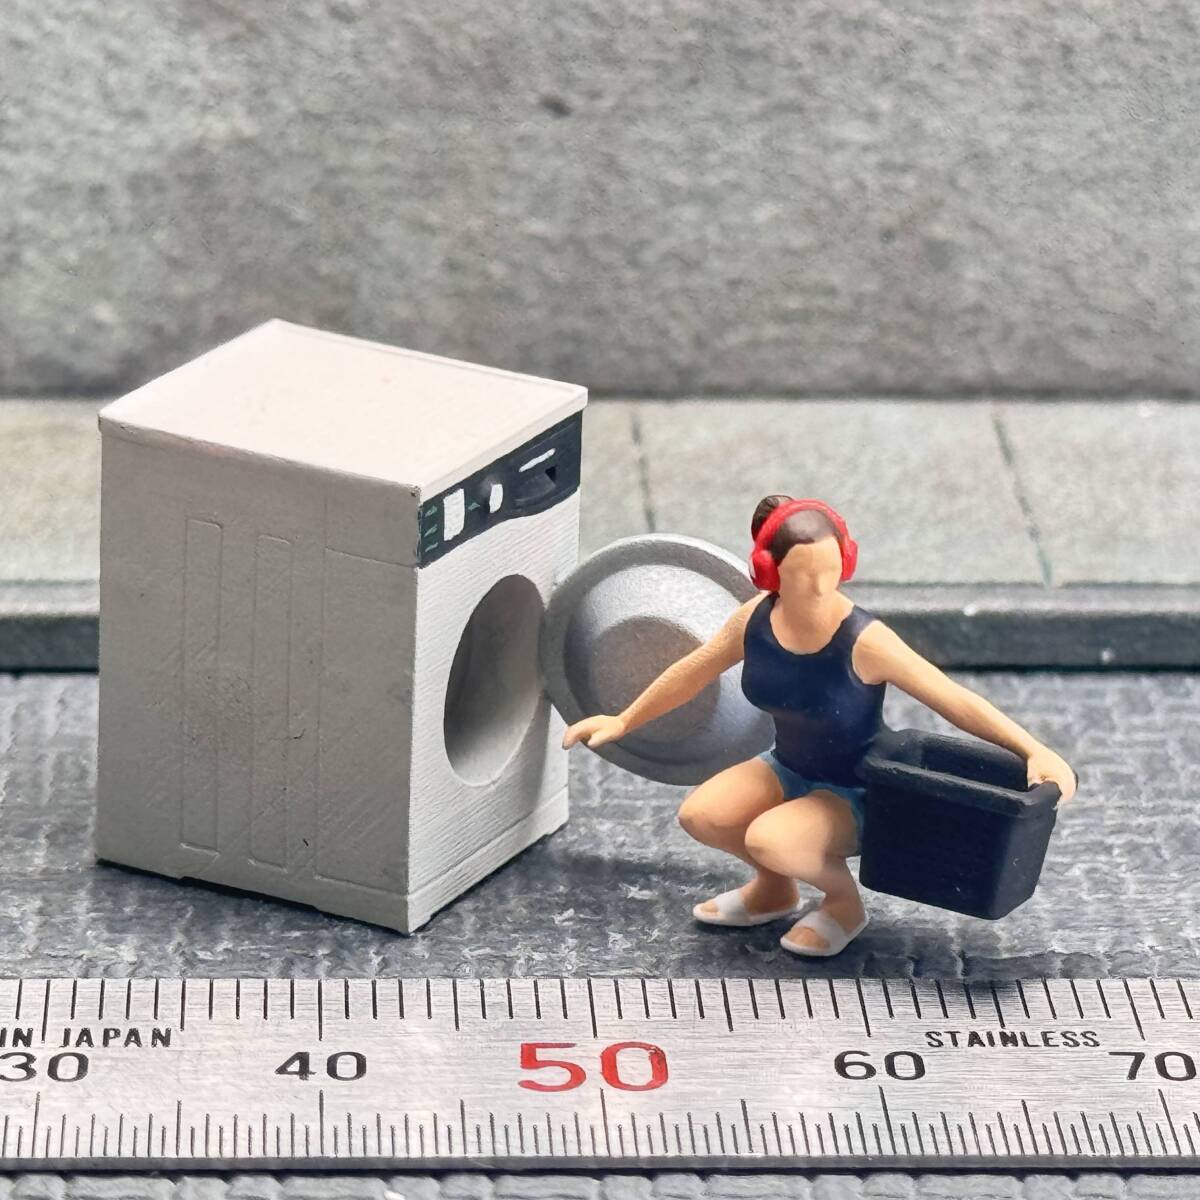 【KS-802】1/64 スケール 業務用洗濯機と利用する女性 フィギュア ミニチュア ジオラマ ミニカー トミカ_画像1